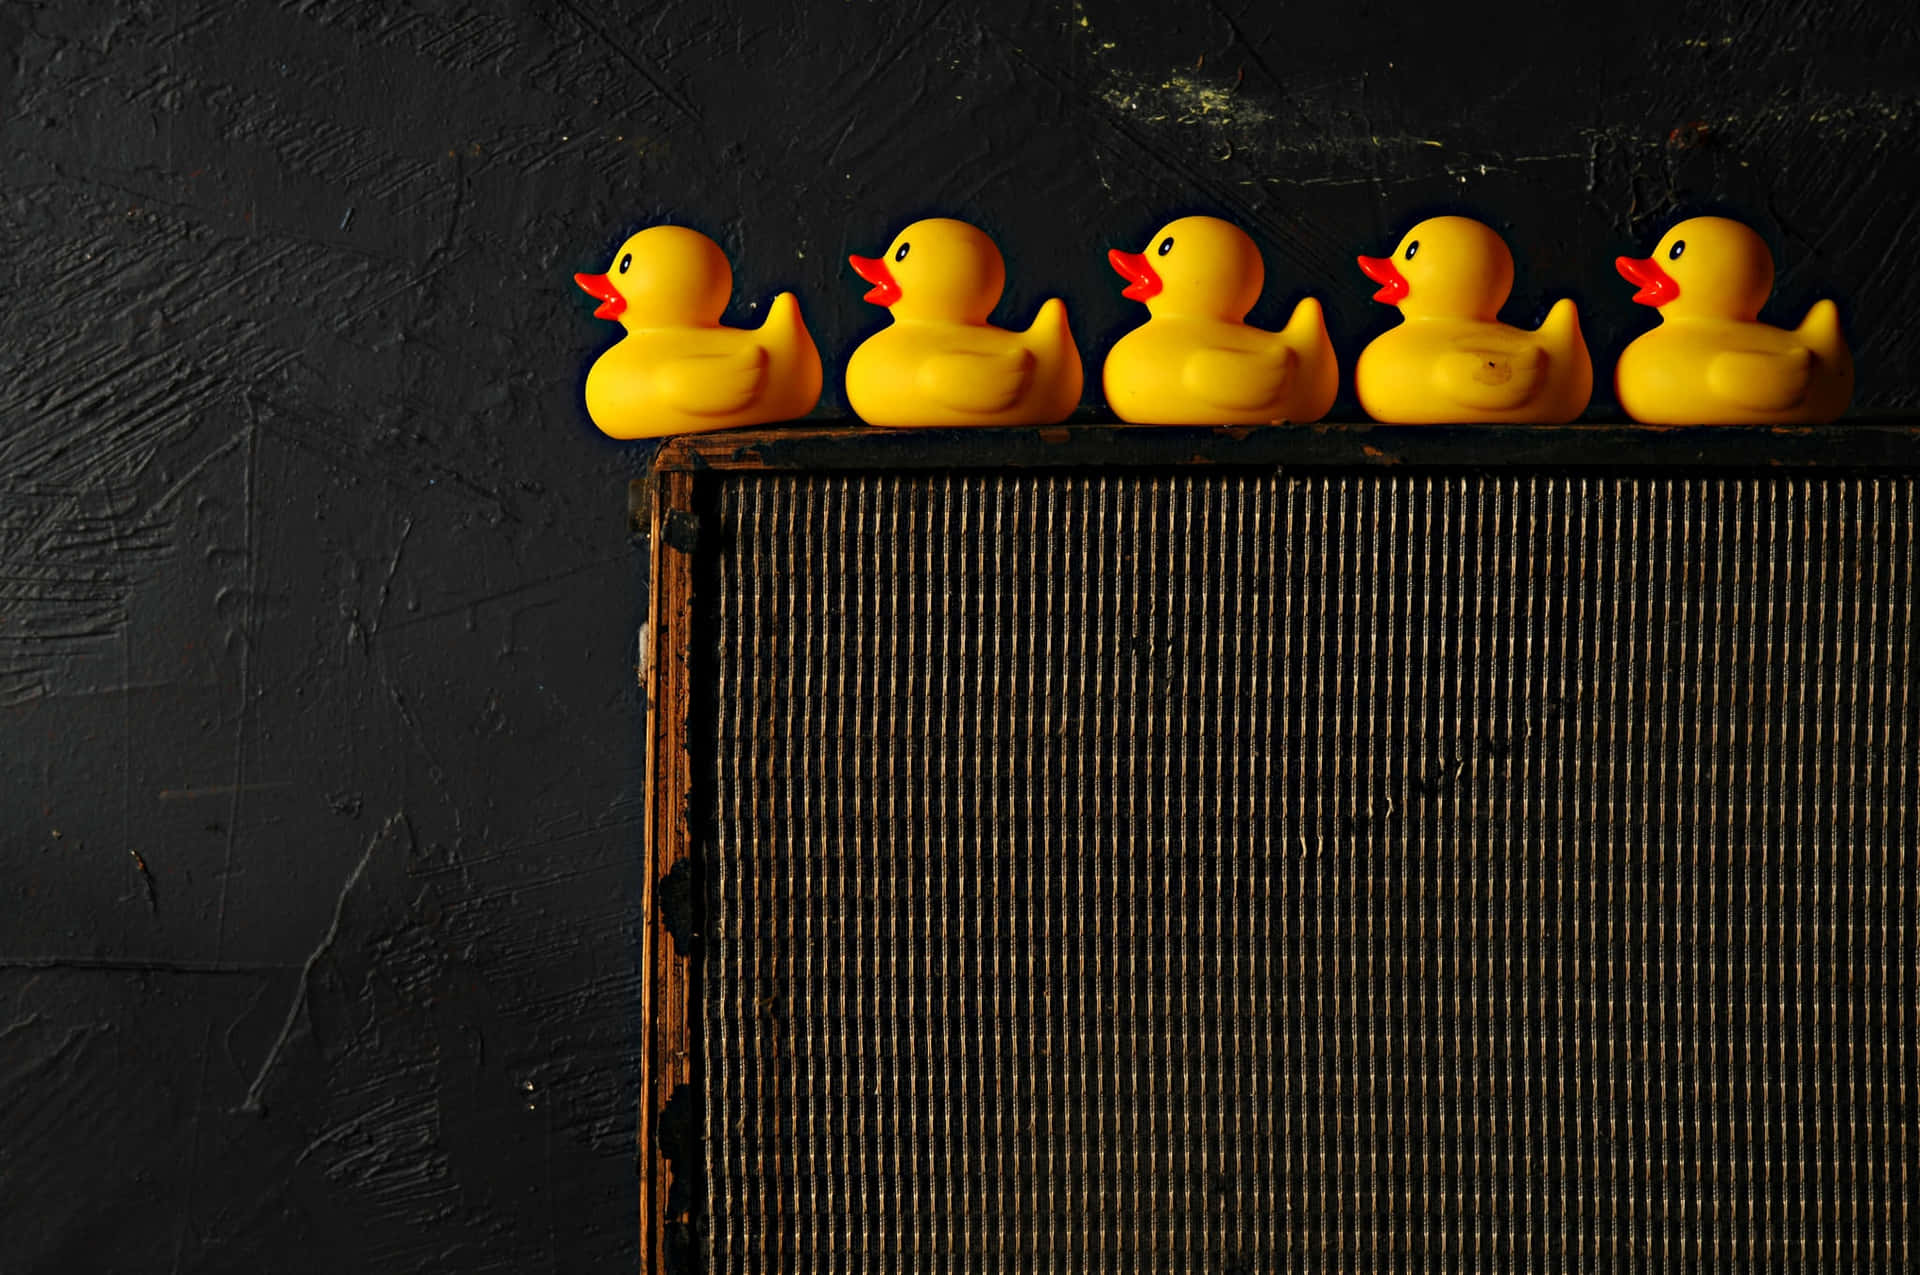 Rubber Ducksina Rowon Dark Background.jpg Wallpaper